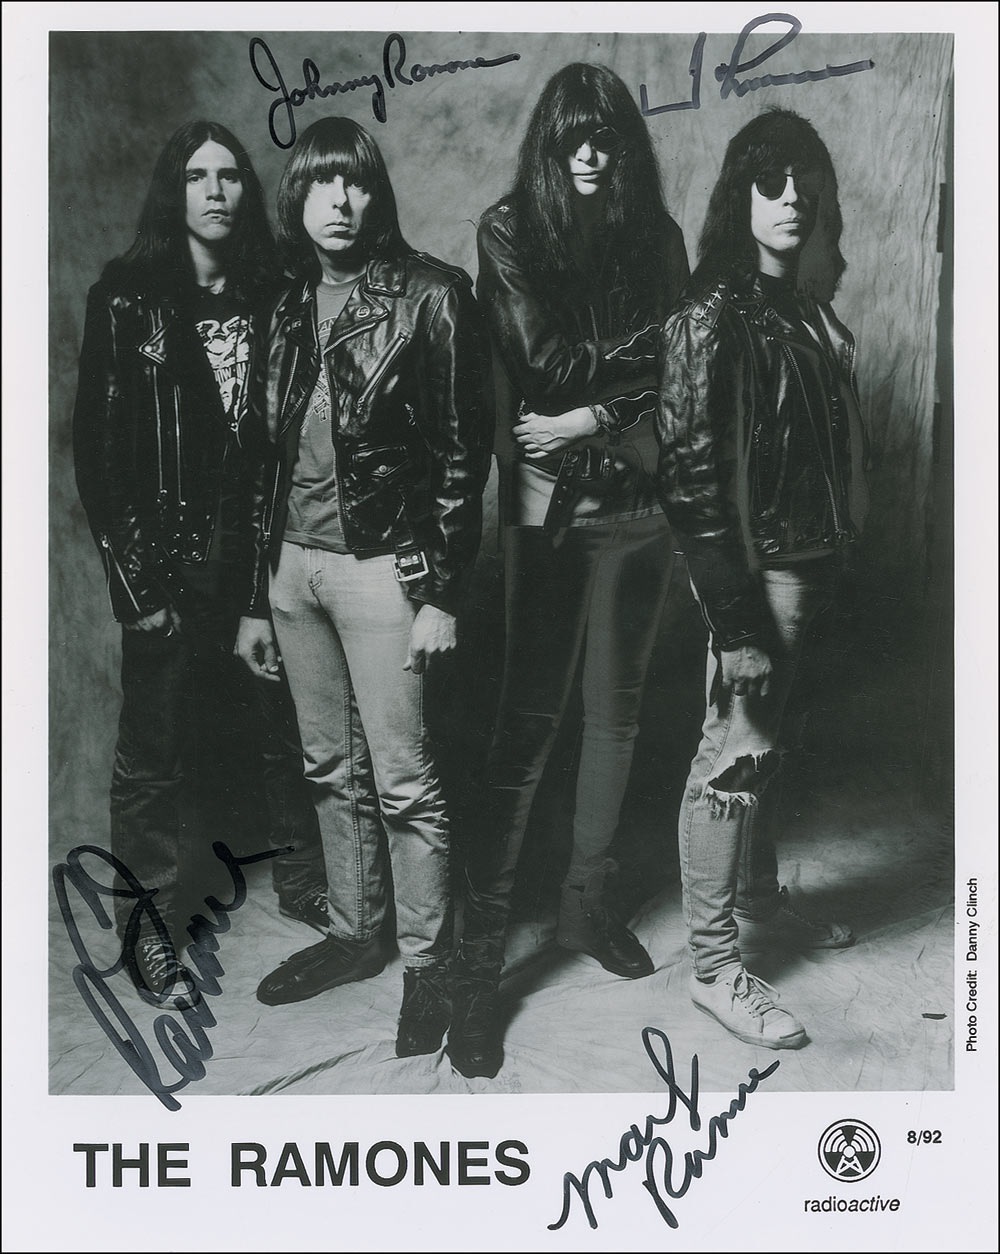 Lot #662 The Ramones - Image 1